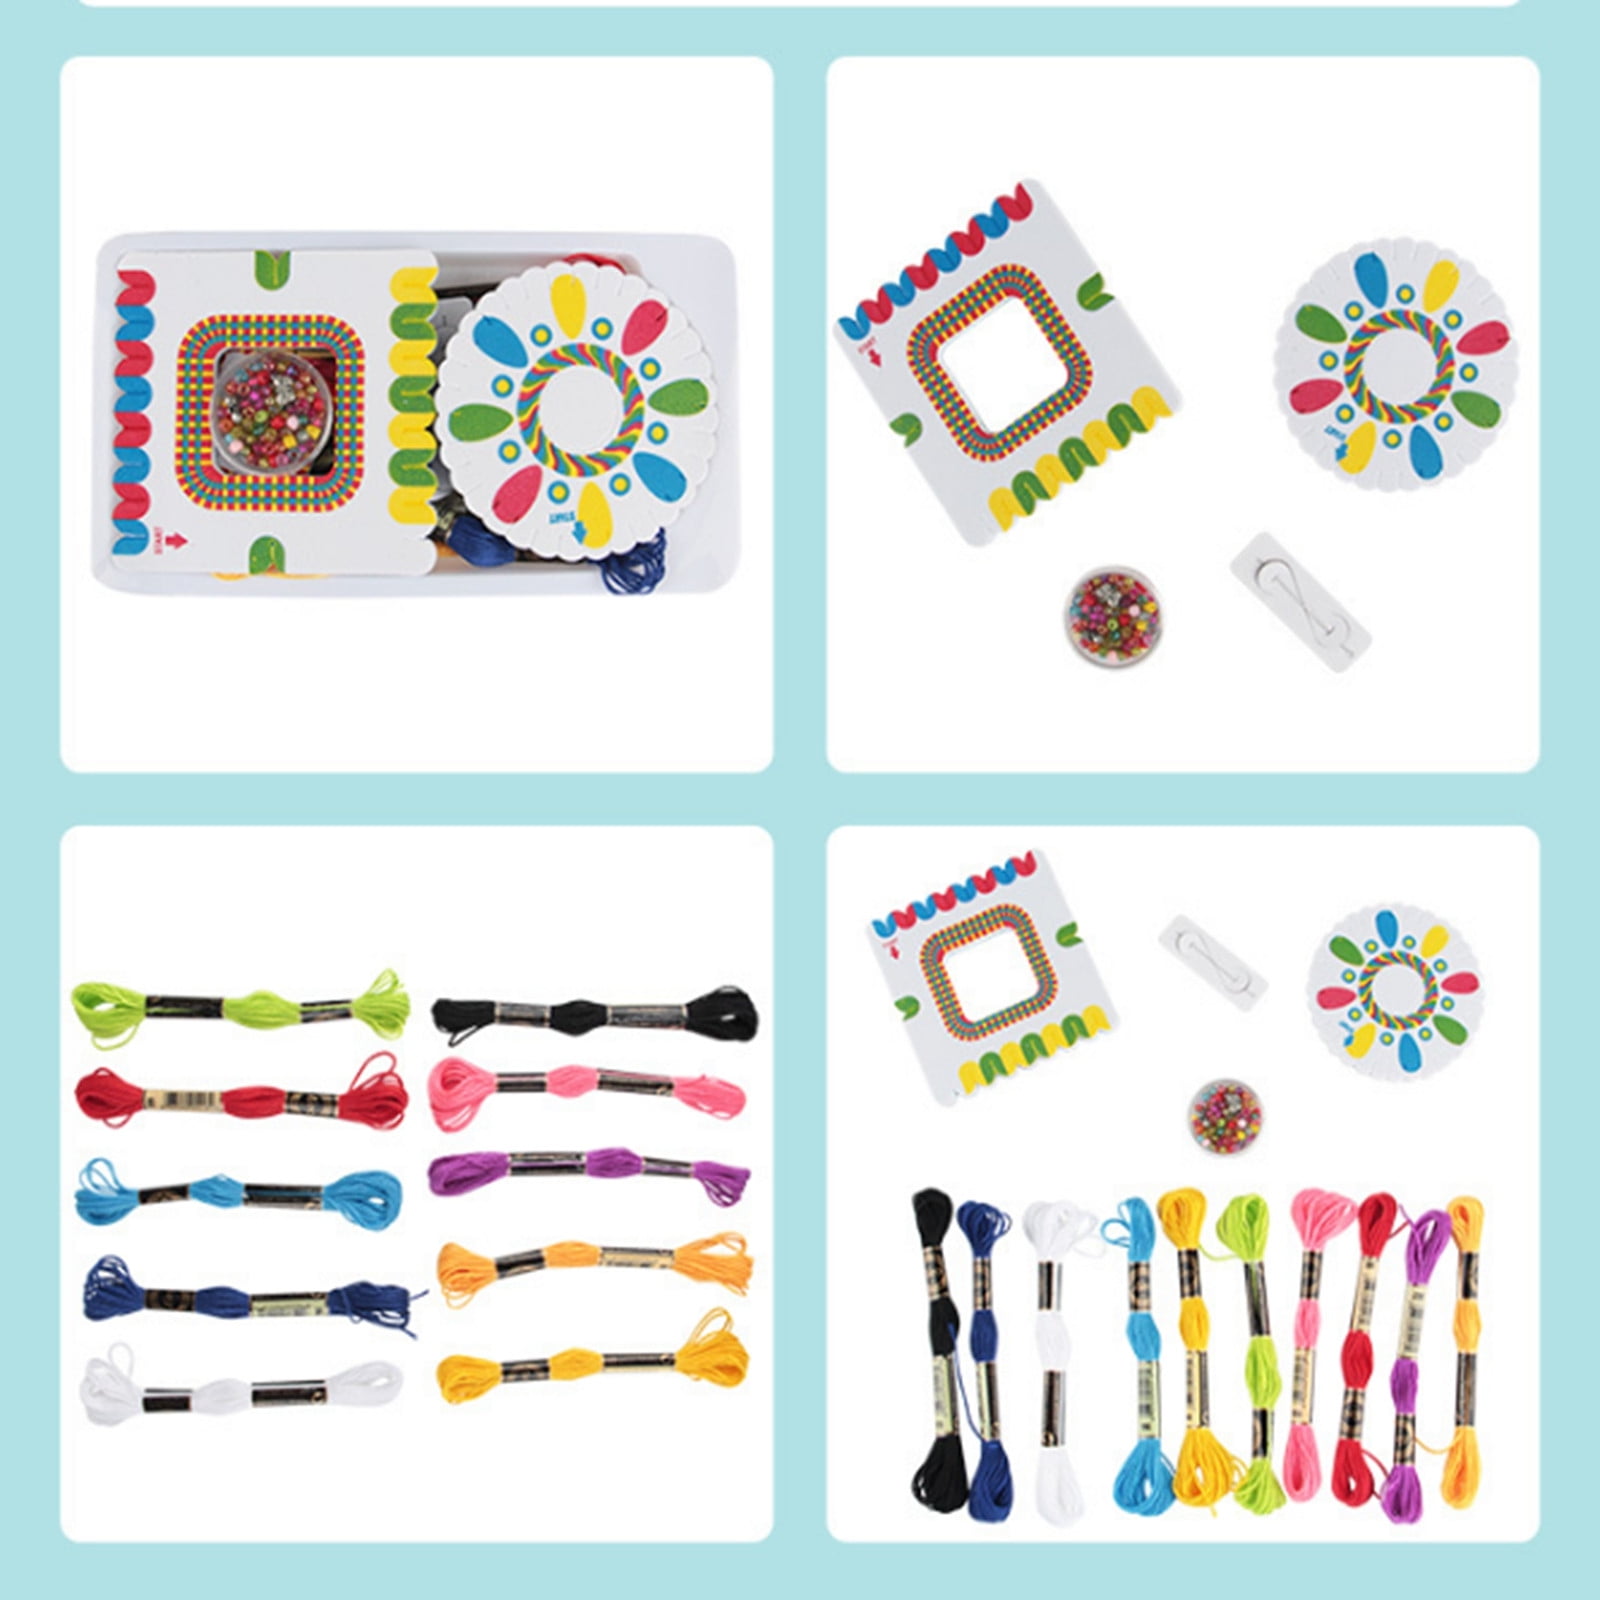 Kizmyee Friendship Bracelet Making Kit 112 PCS Toy, Presents for Ages 7 8 9  10 11 12 Year Old Teen Girl, for DIY Refill Bracelet Making Craft Kits